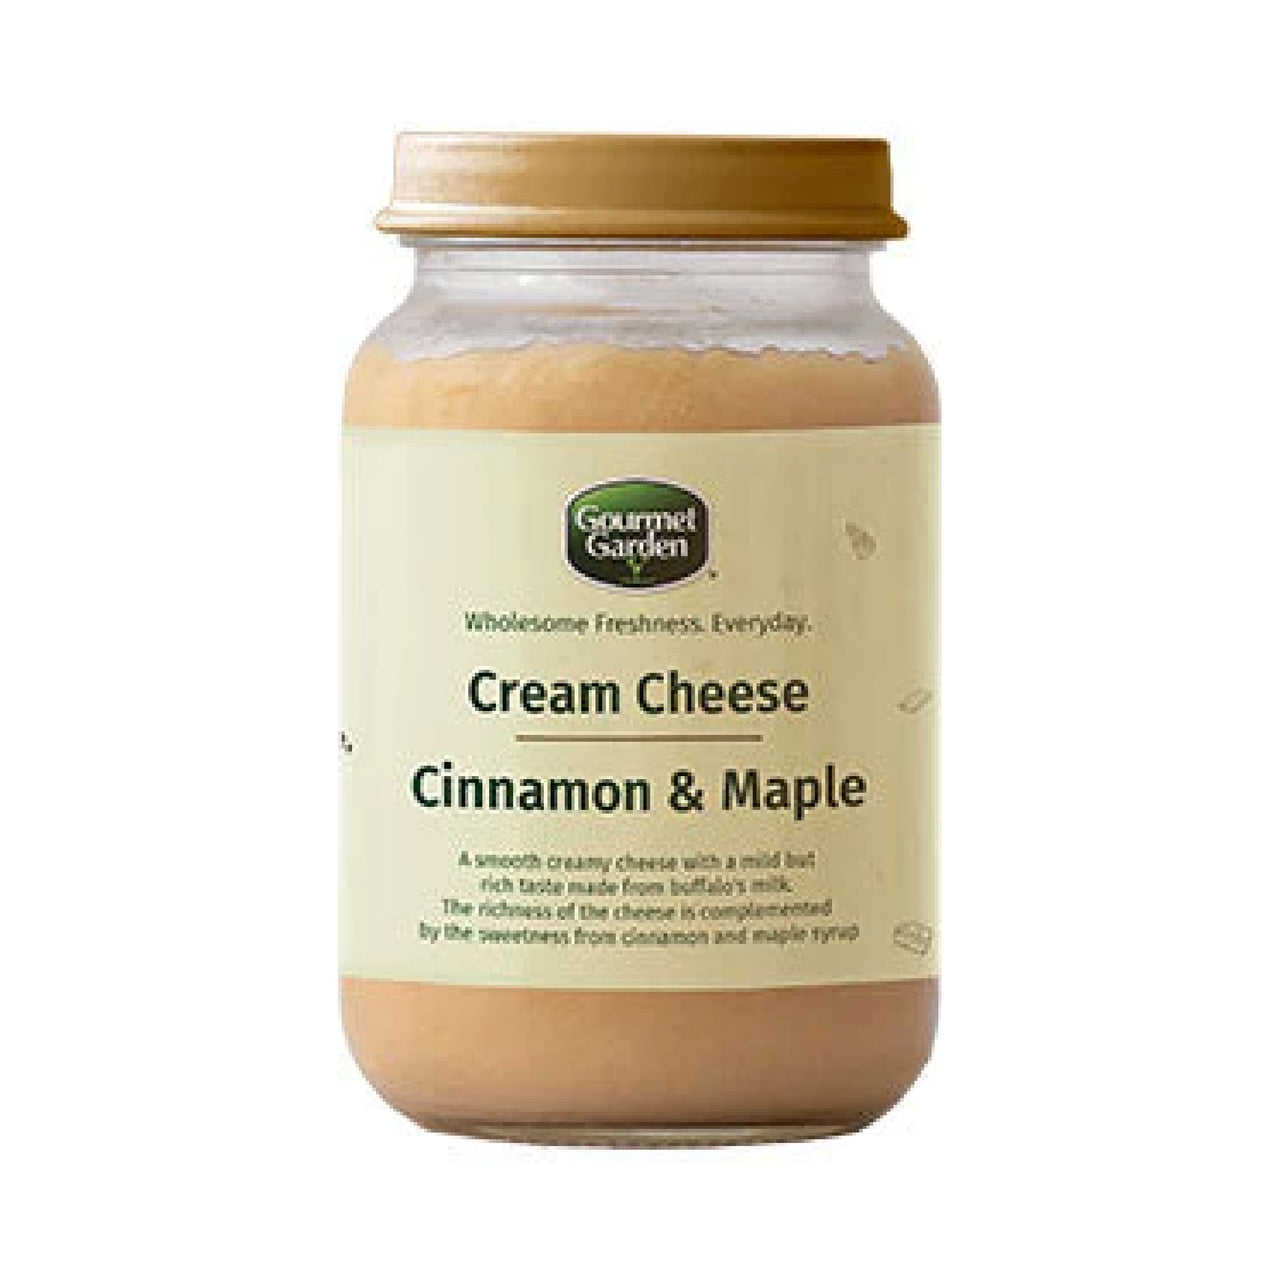 Cinnamon & Maple Cream Cheese